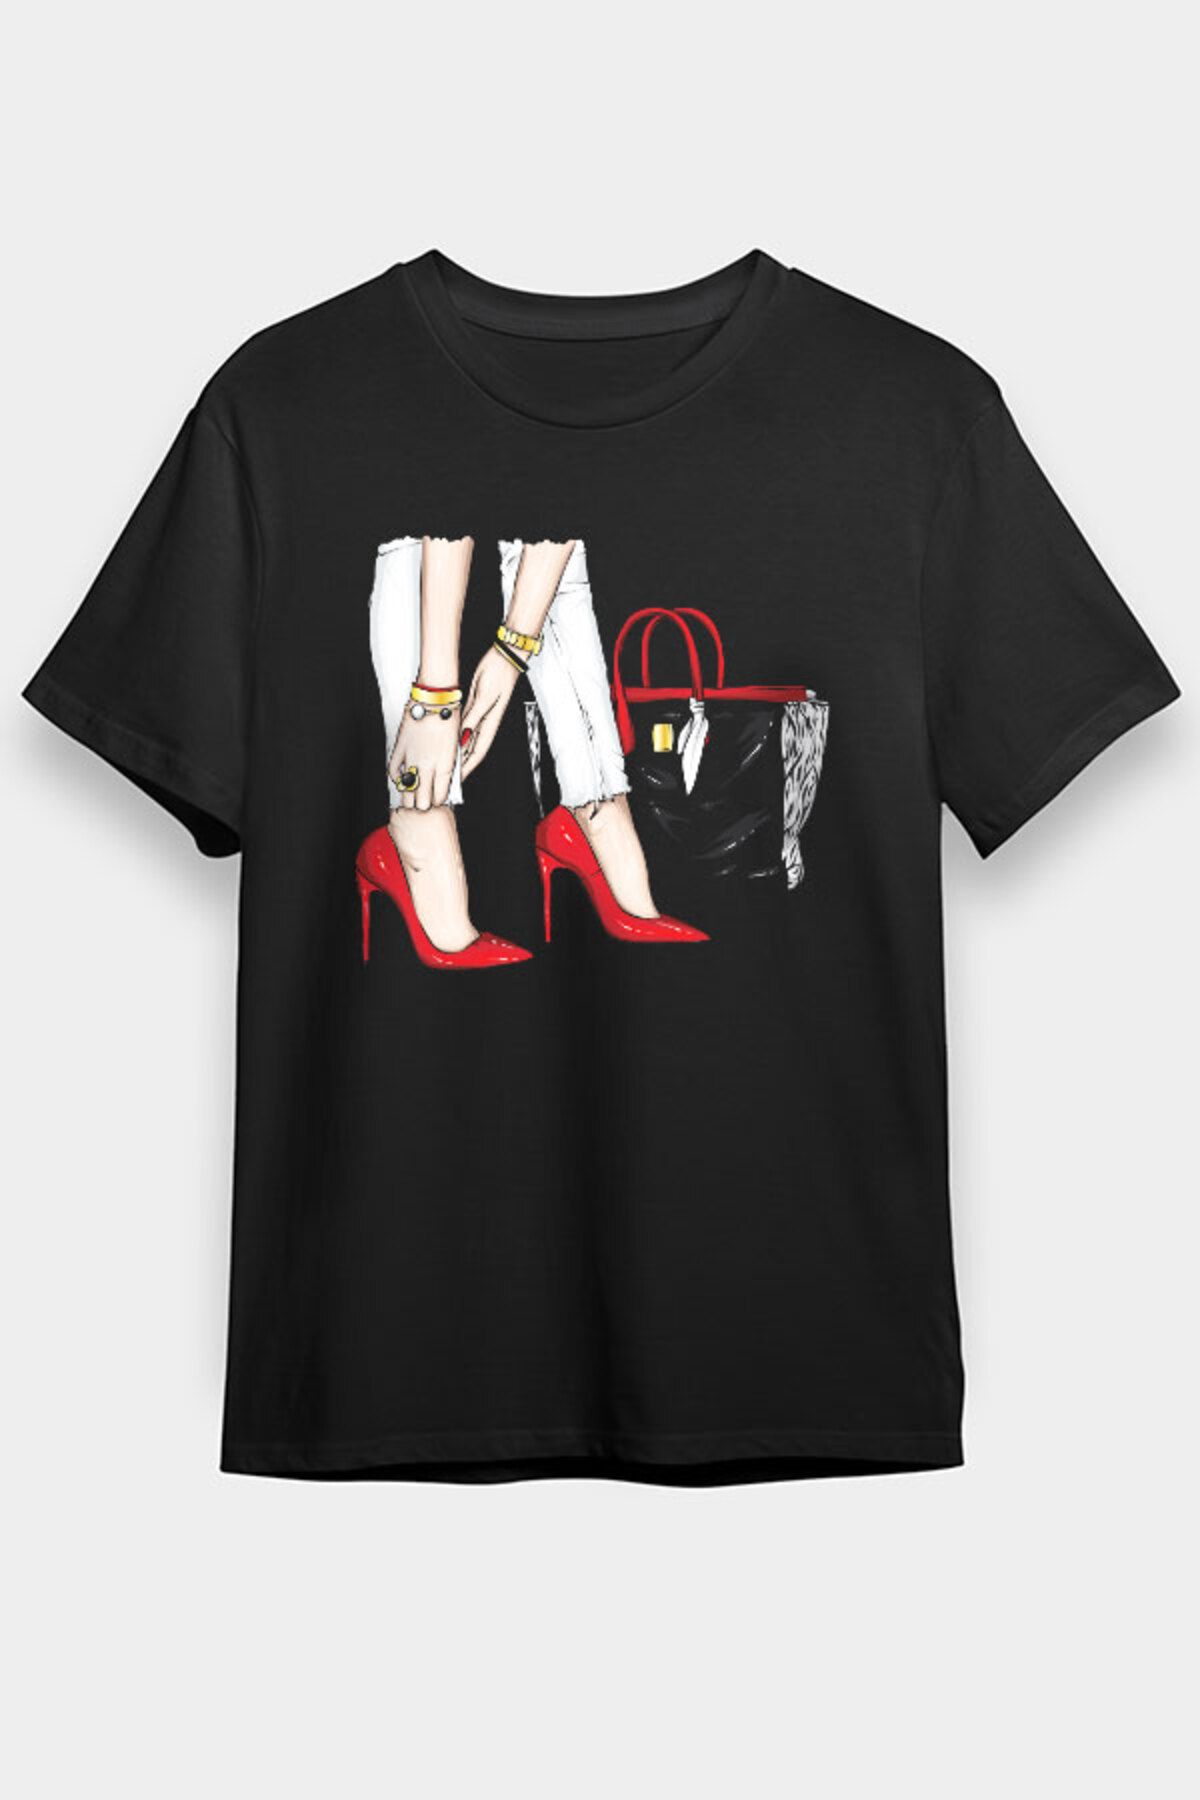 Darkhane Kırmızı Stiletto ve Çanta Fashion Siyah Unisex Tişört T-Shirt